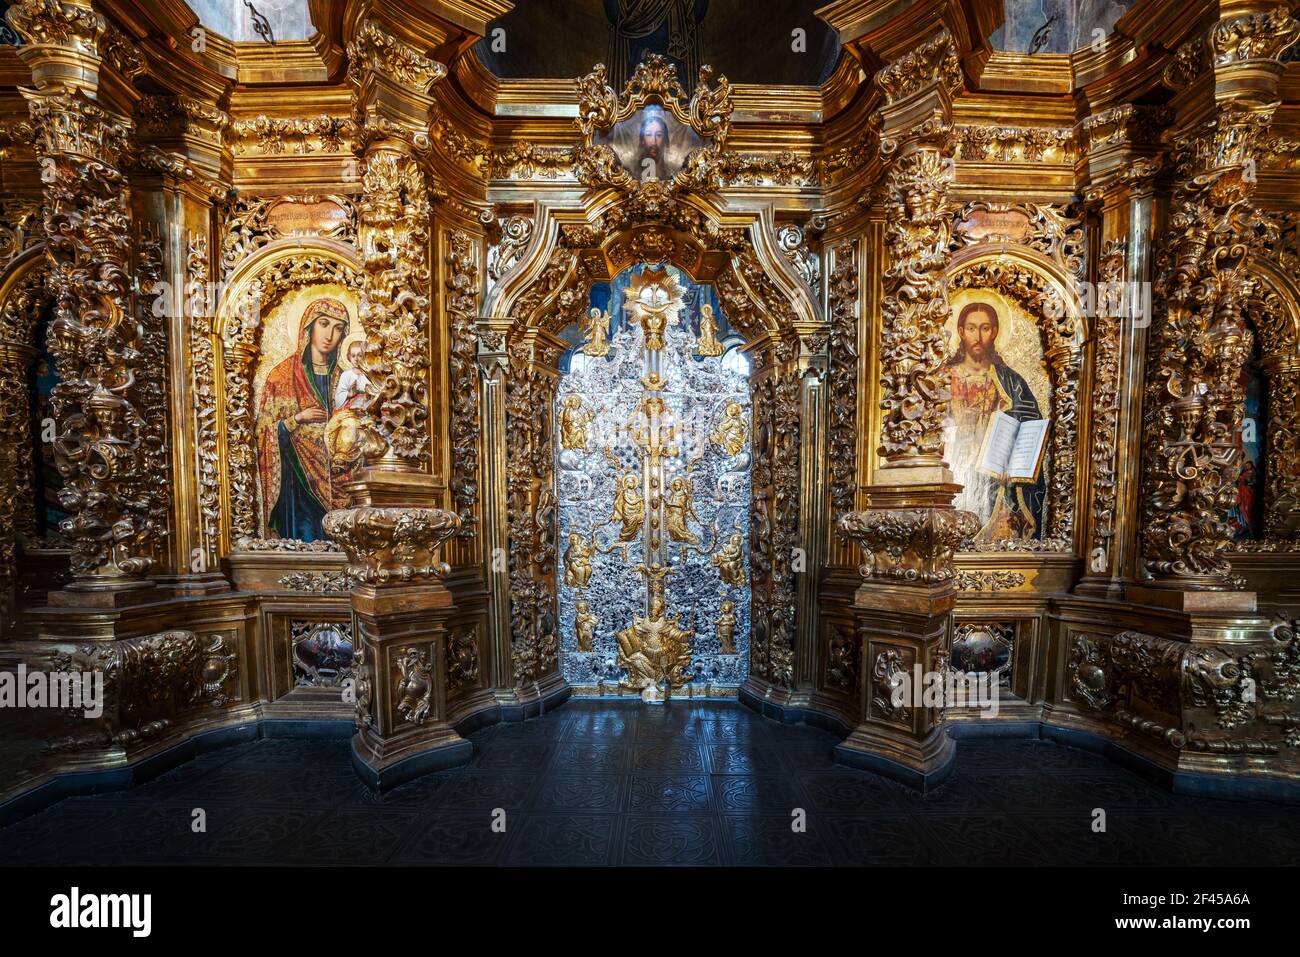 Golden Altar of Saint Sophia Cathedral interior - Kiev, Ukraine Stock Photo